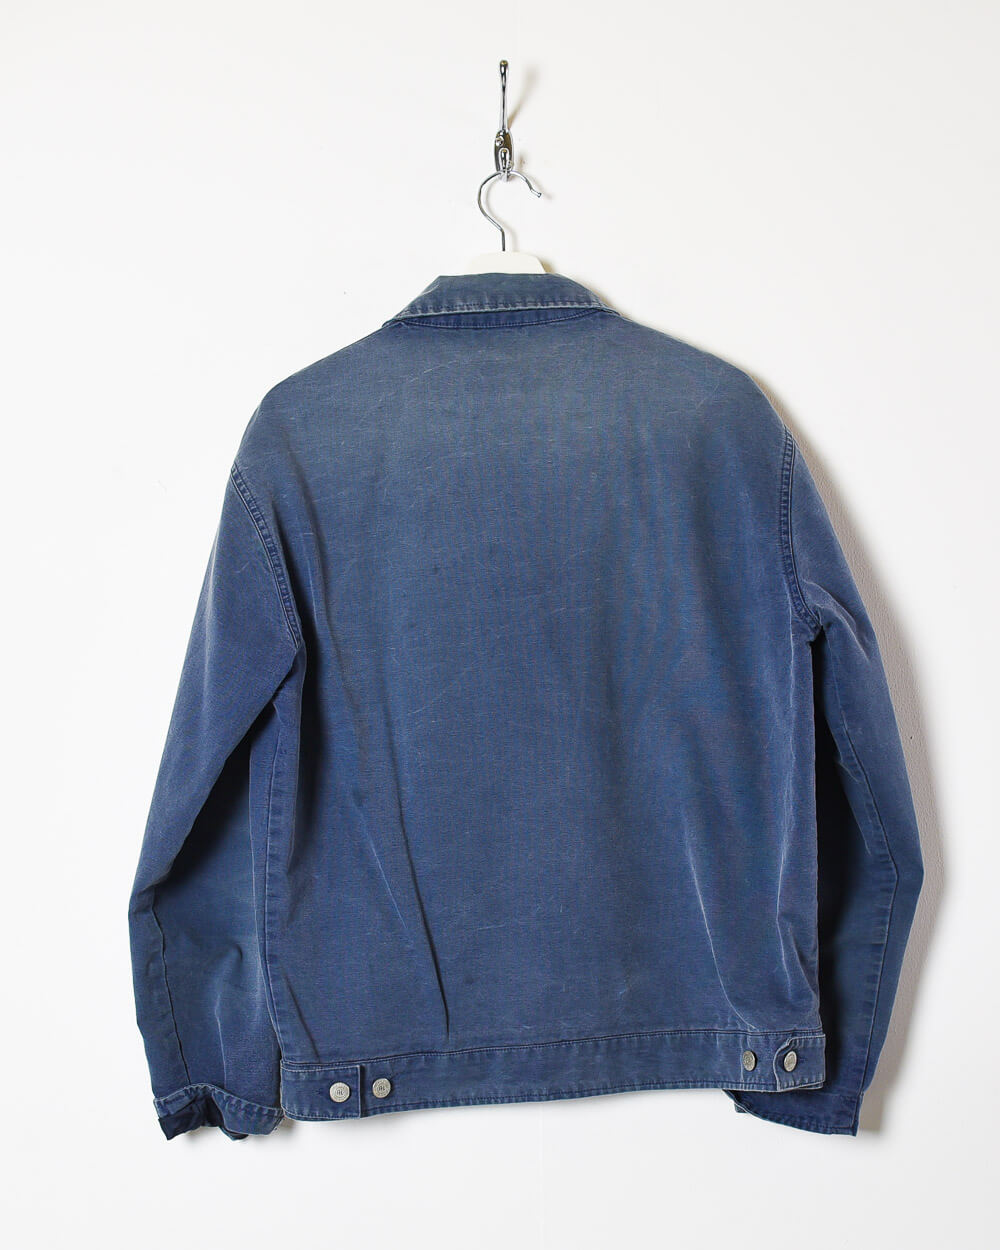 Blue Ralph Lauren Polo Jeans Co Harrington Jacket - Medium